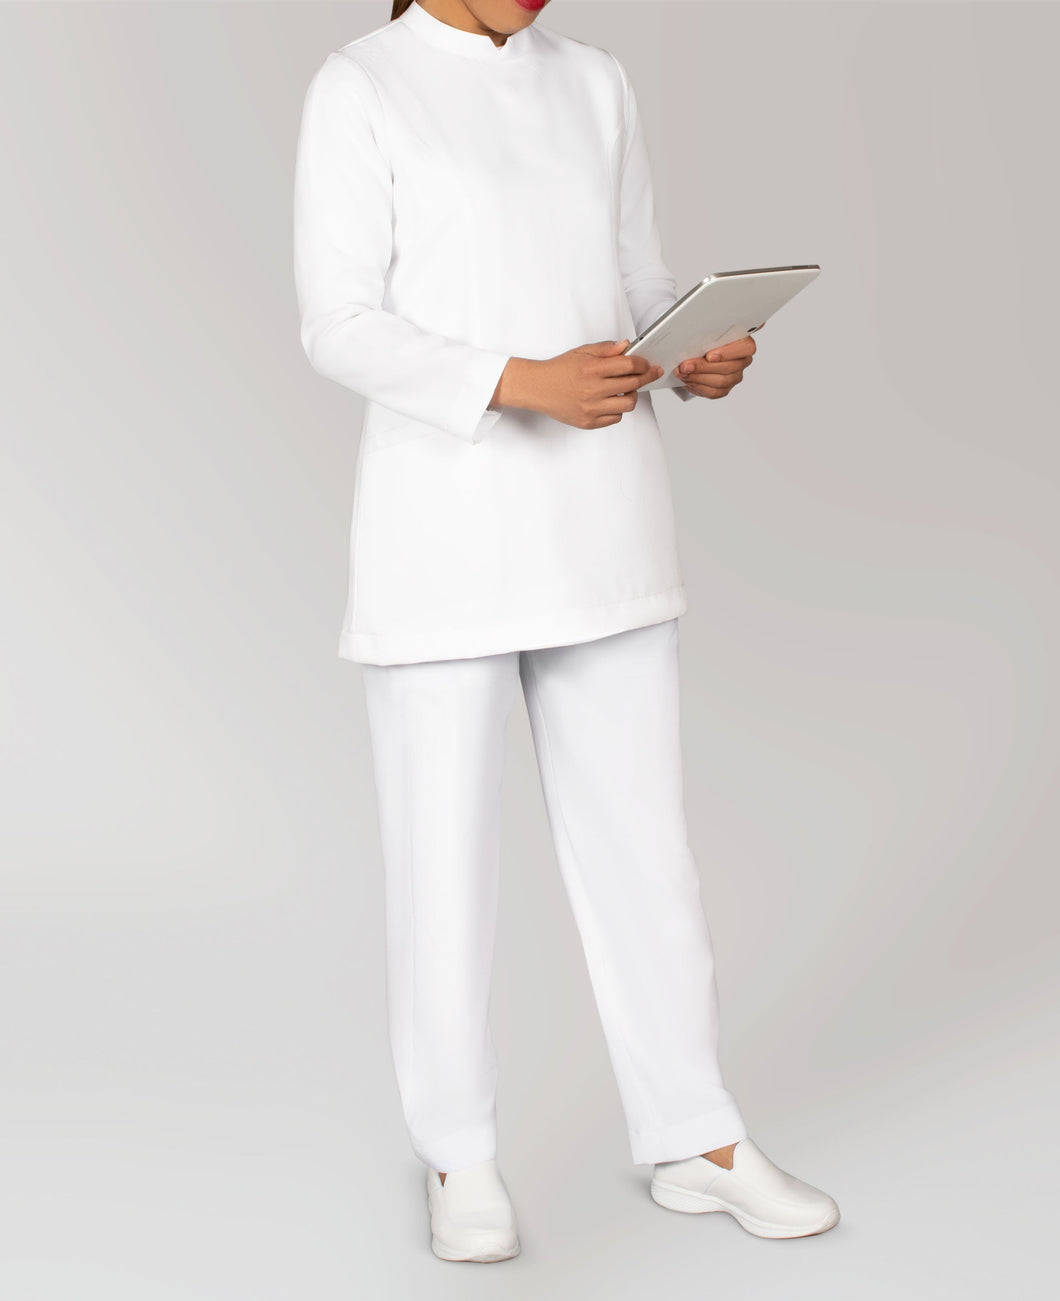 Women Nurse Uniform in Minimatt